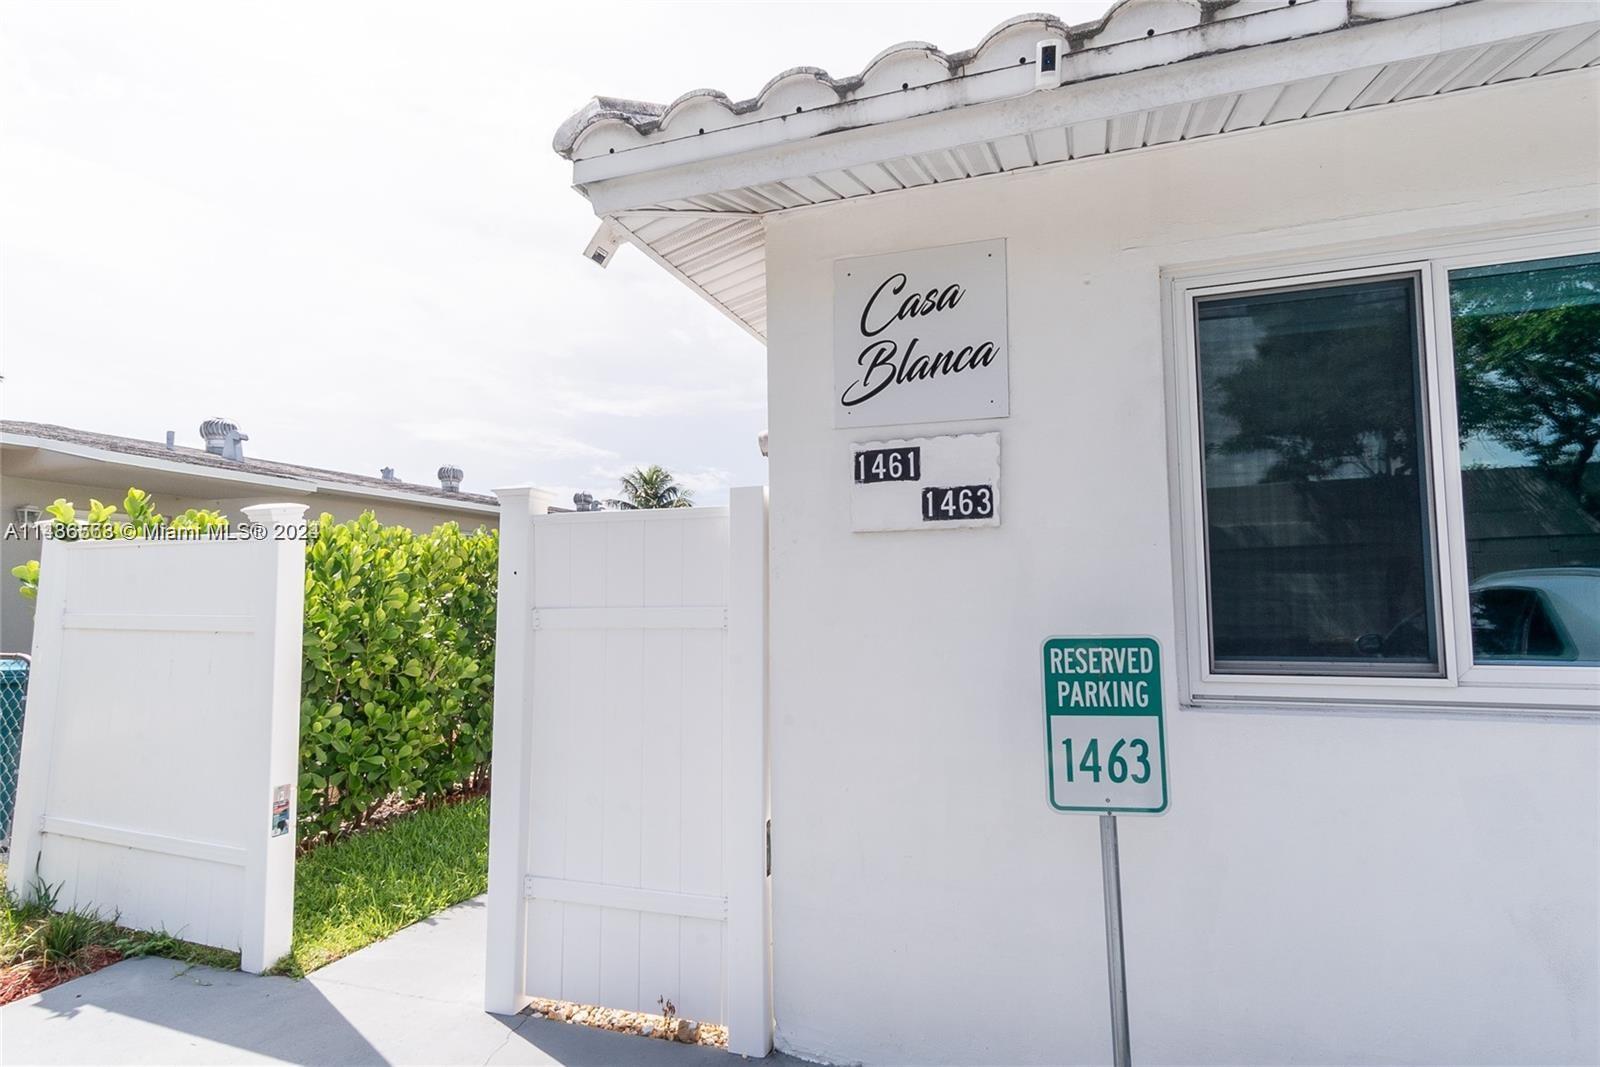 Rental Property at 1461 Nw 10th St St, Dania Beach, Miami-Dade County, Florida -  - $895,000 MO.